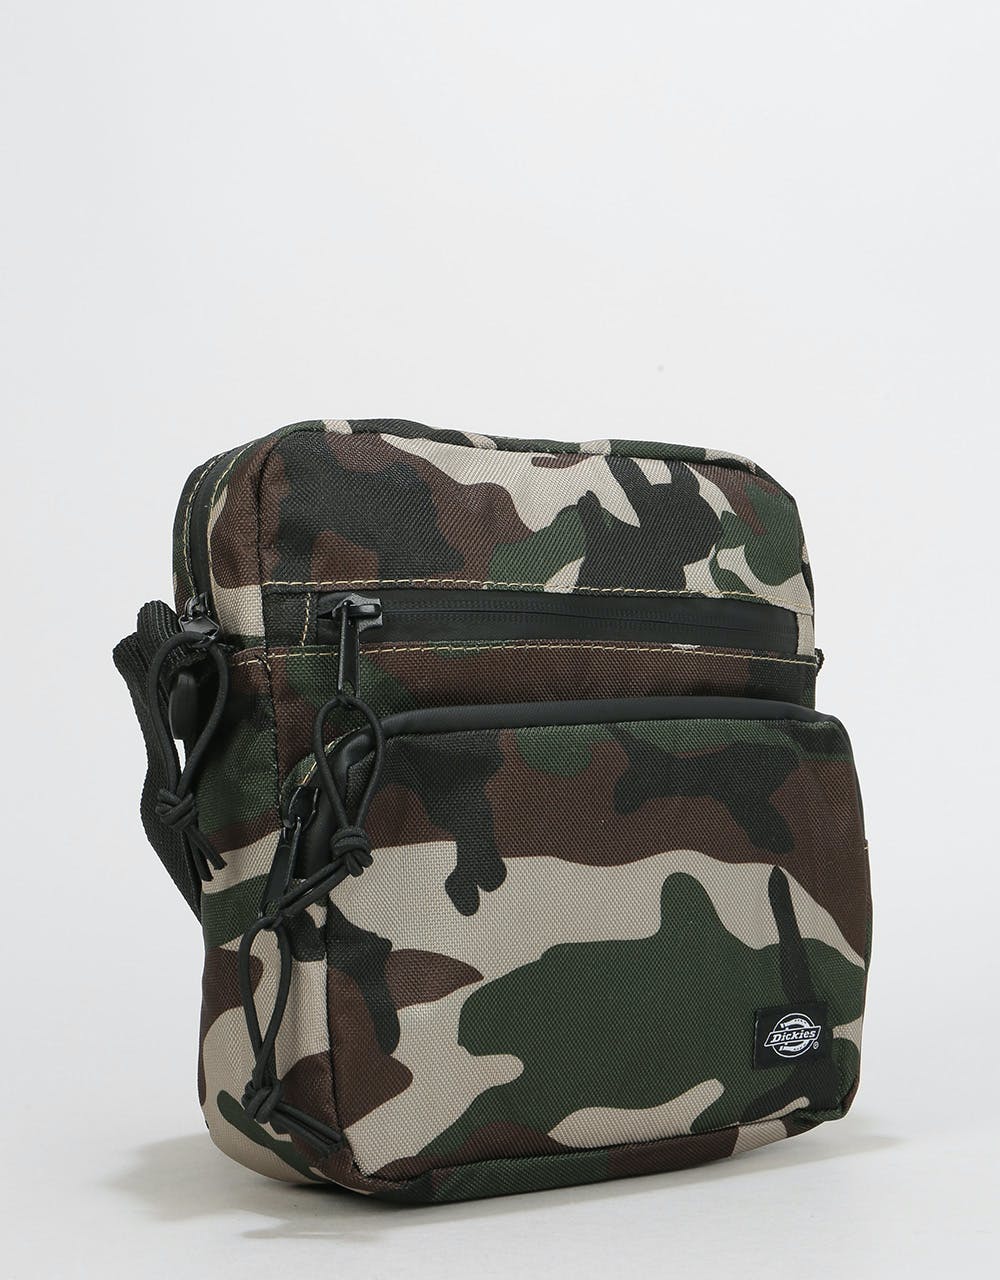 Dickies Gilmer Cross Body Bag - Camouflage